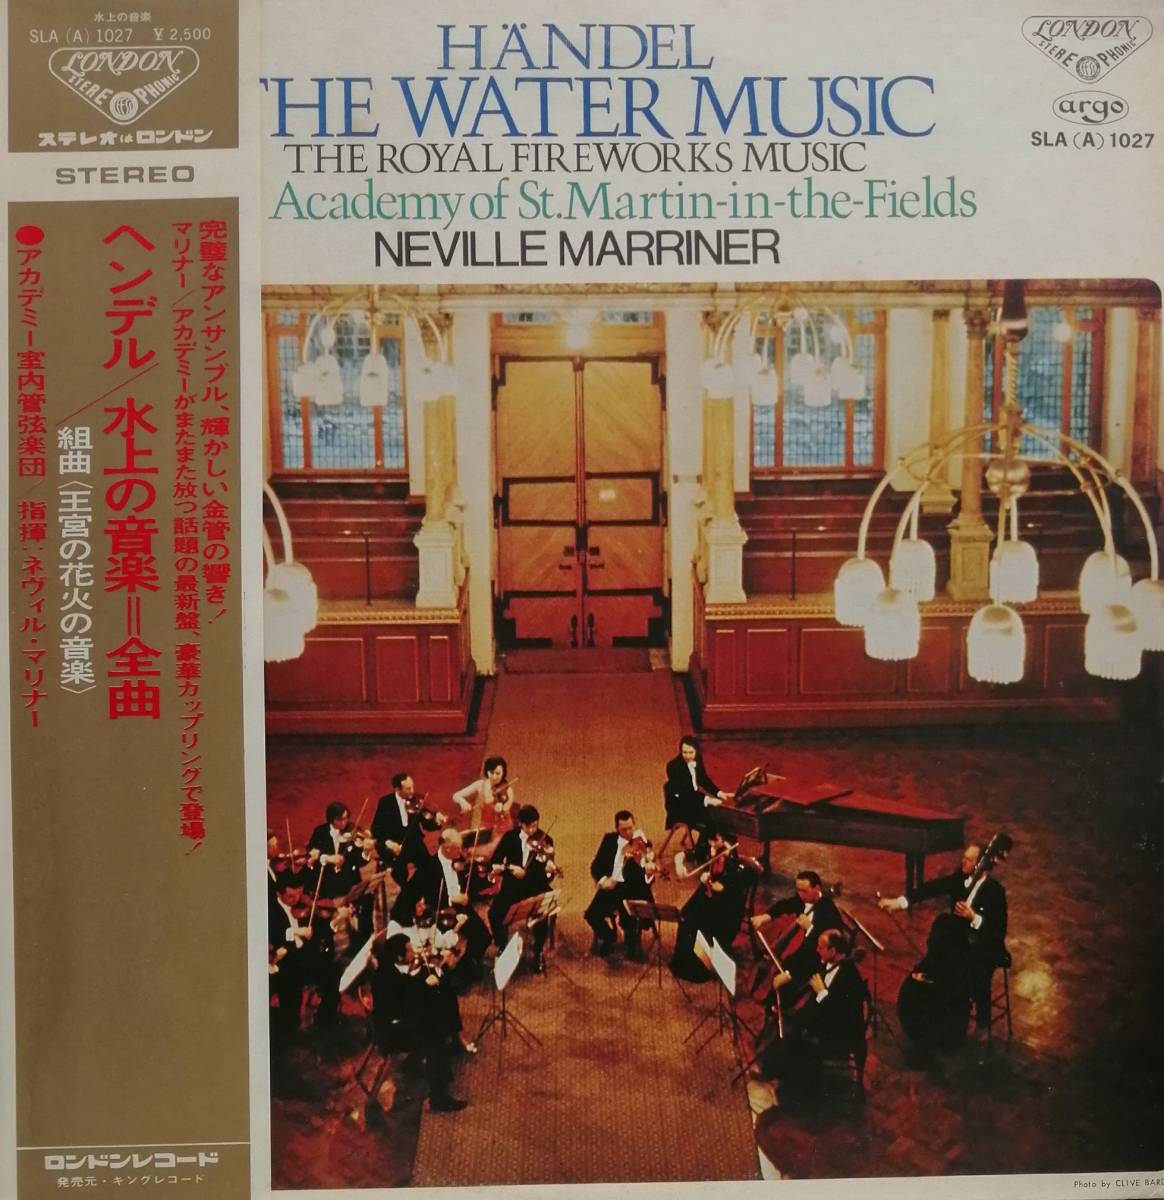 LP盤 ネヴィル・マリナー/Academy of St.Martin-in-the-Fields　Handel 「水上の音楽」&「王宮の花火の音楽」_画像1